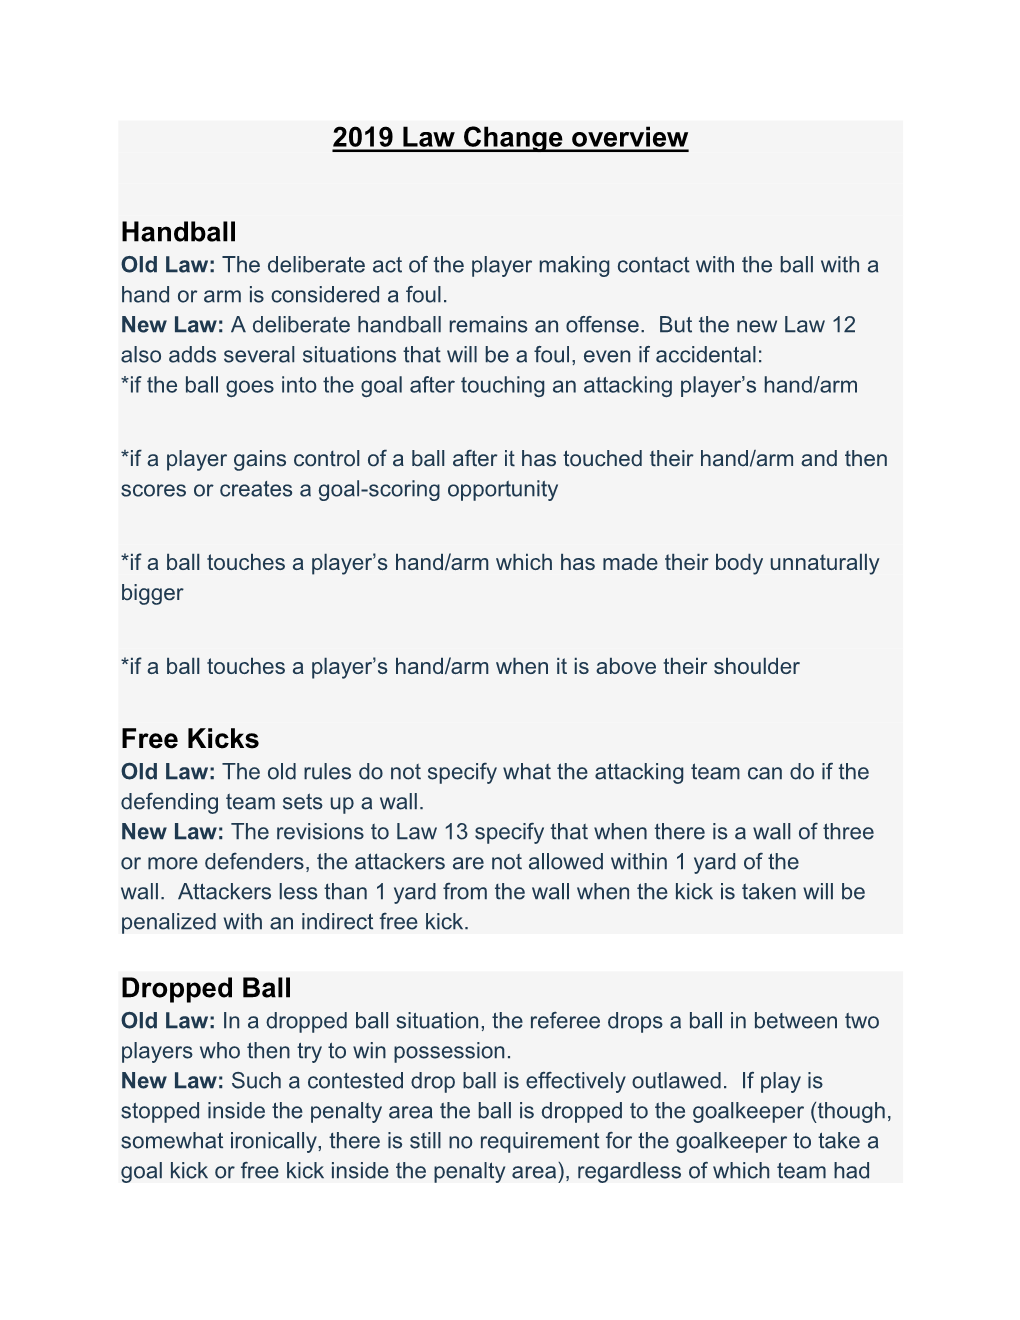 2019 Law Change Overview Handball Free Kicks Dropped Ball